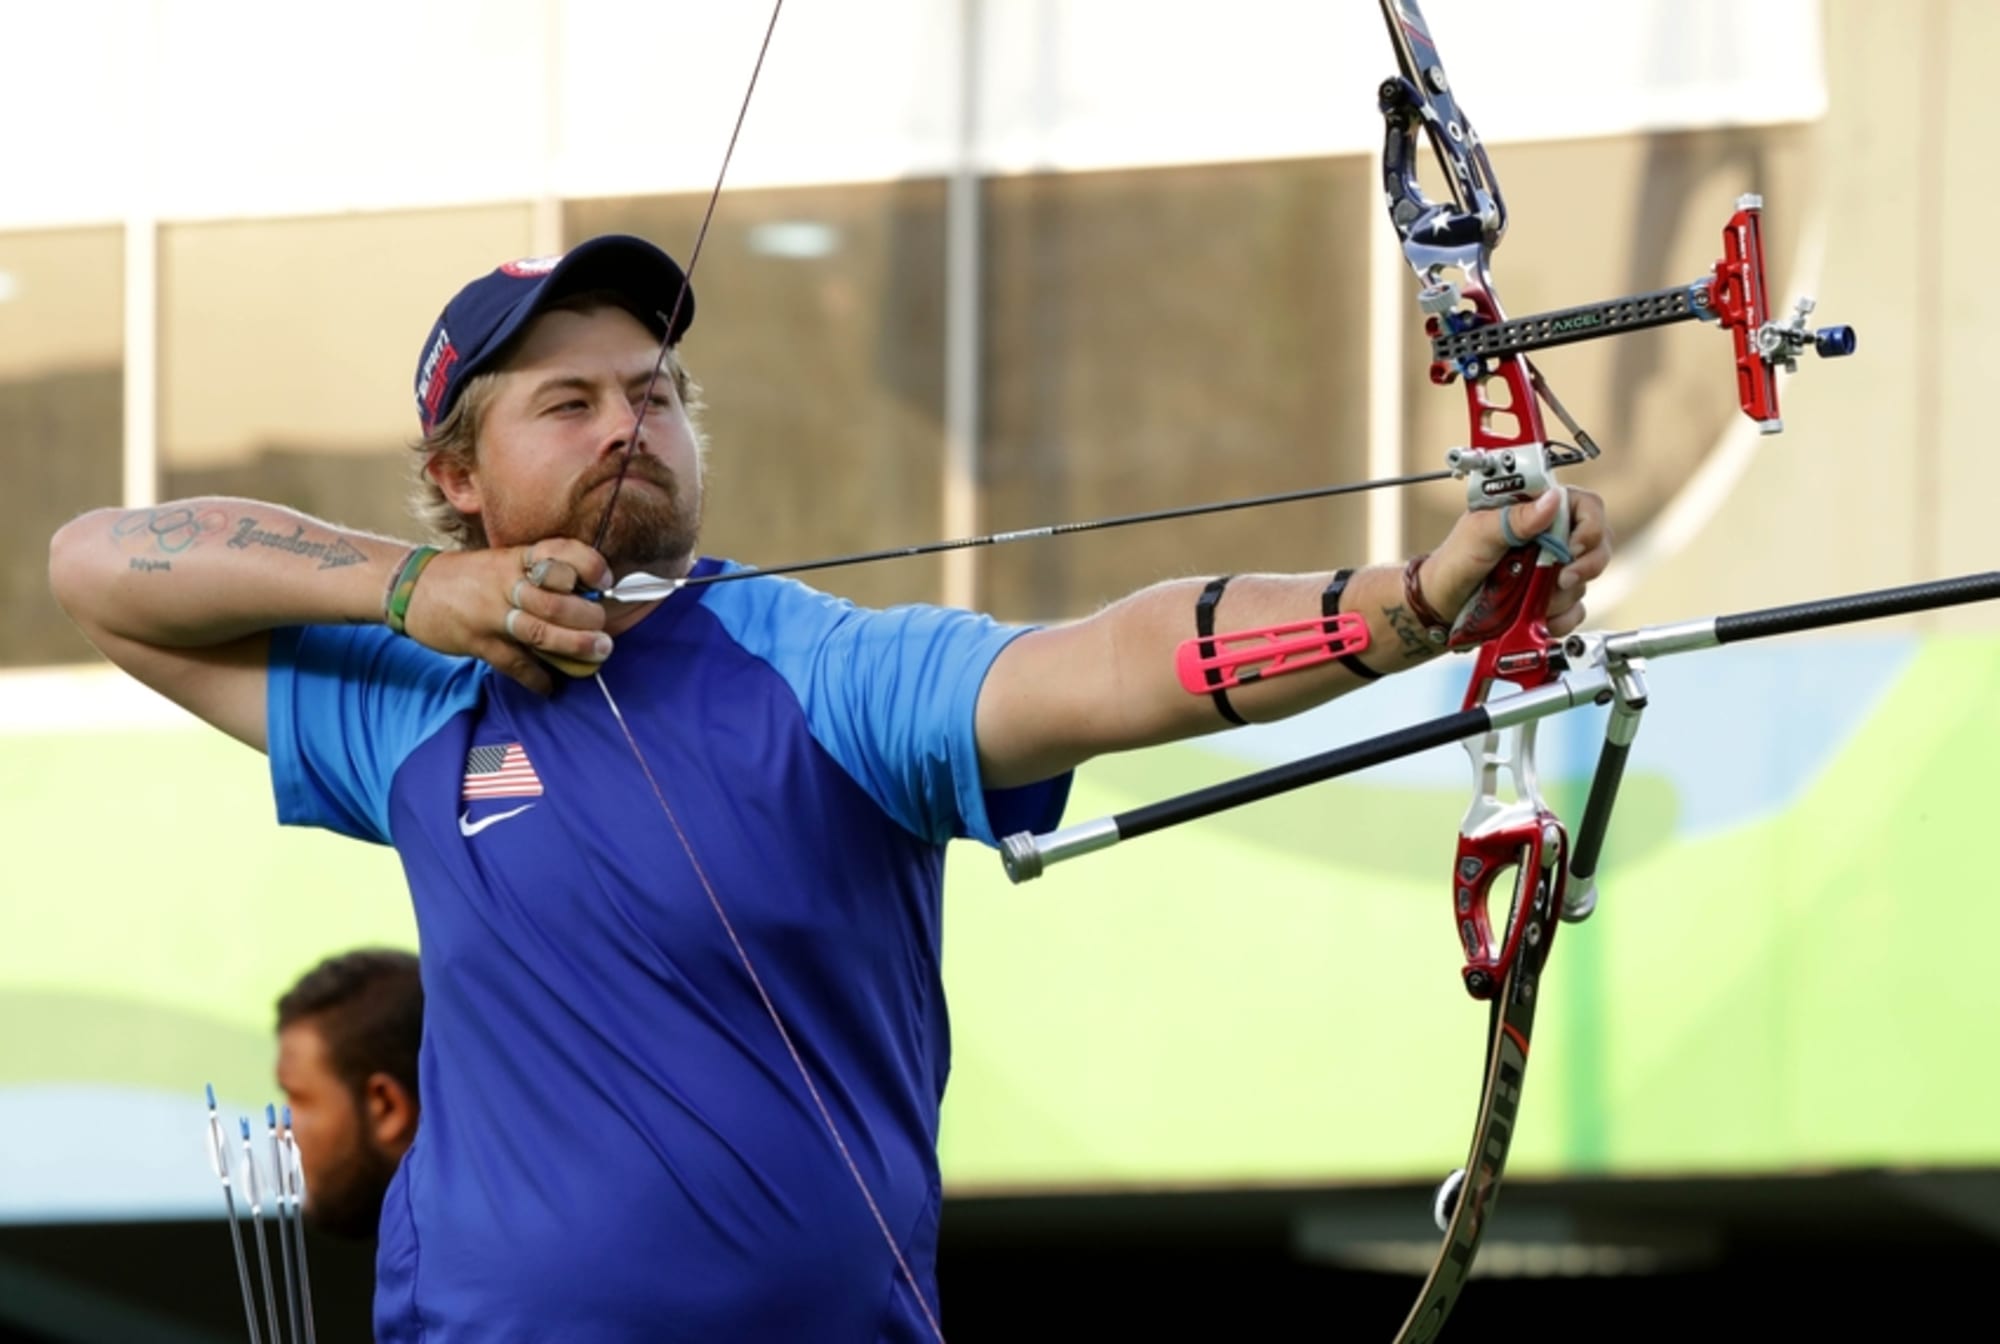 Olympics Archery results, August 9: American Brady Ellison ...